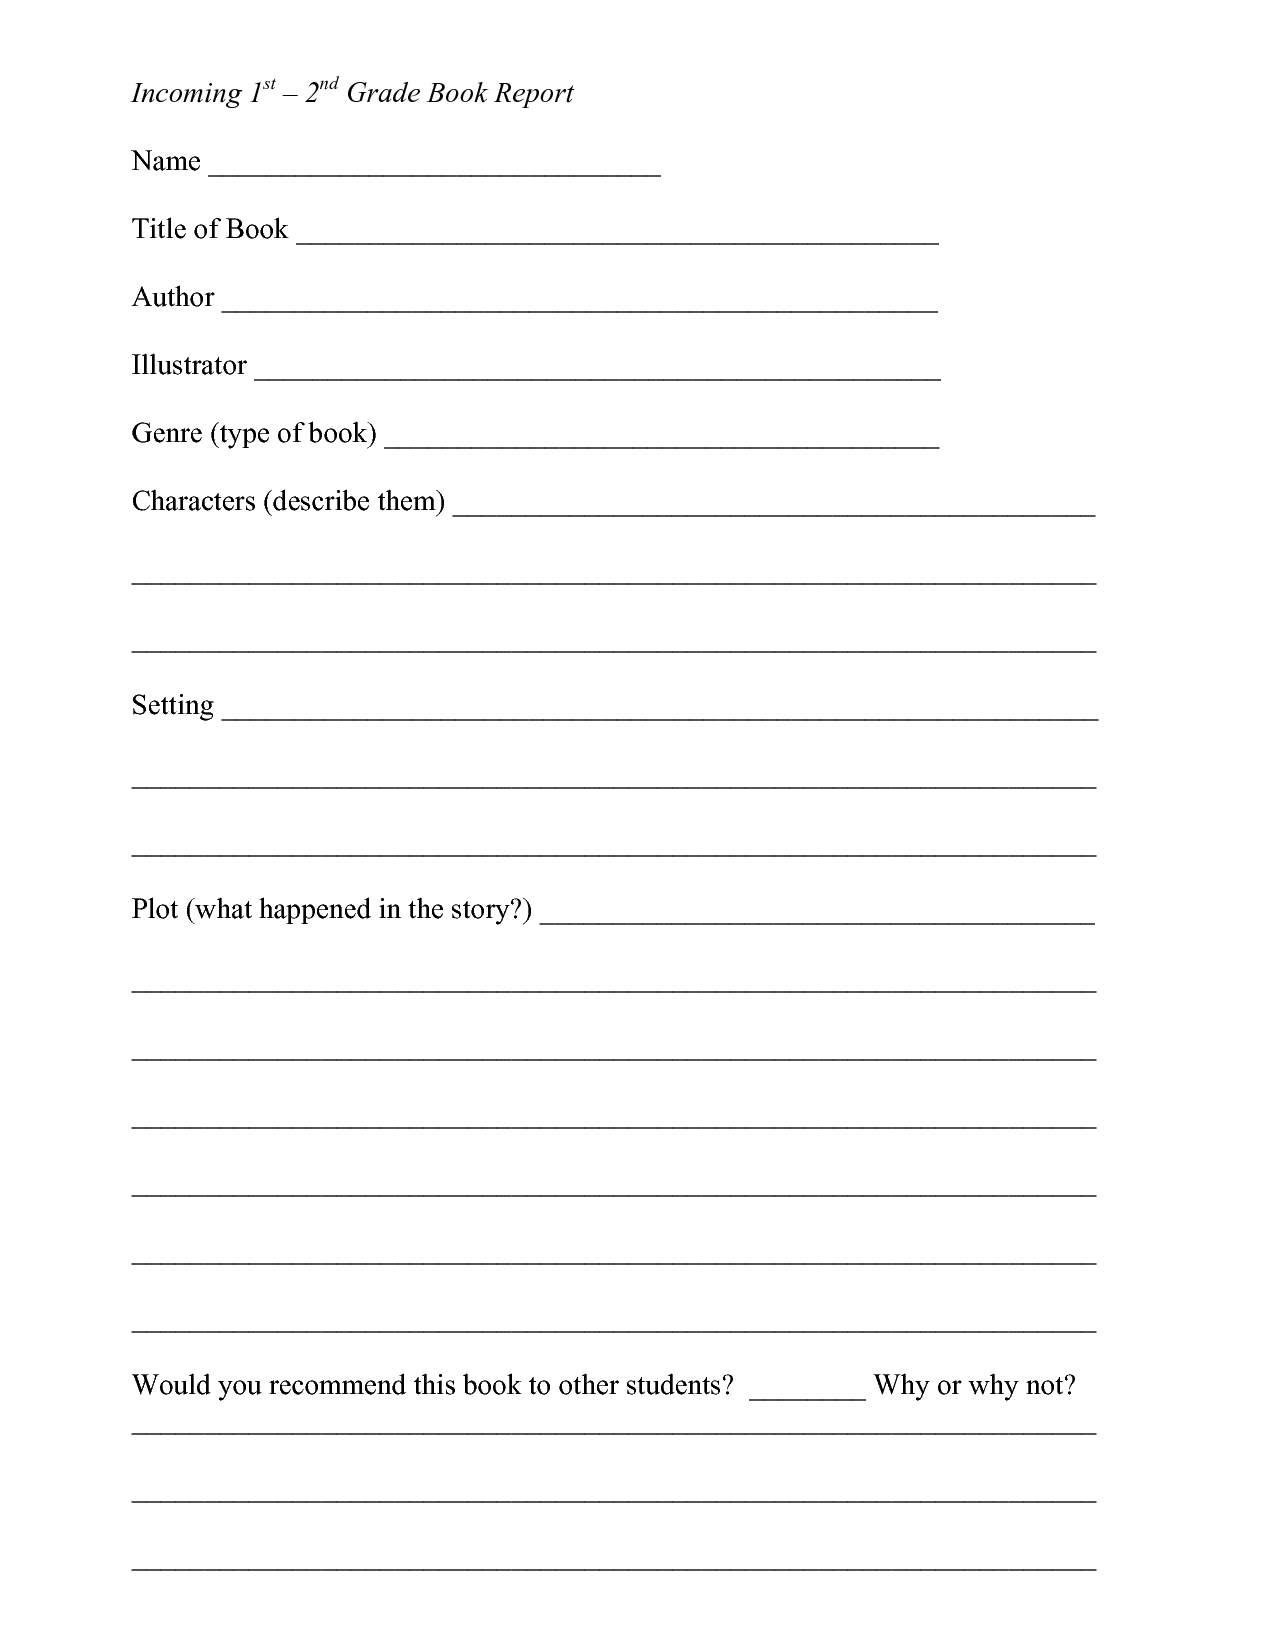 Book Report Template 2Nd Grade Free – Book Report Form With Book Report Template 2Nd Grade